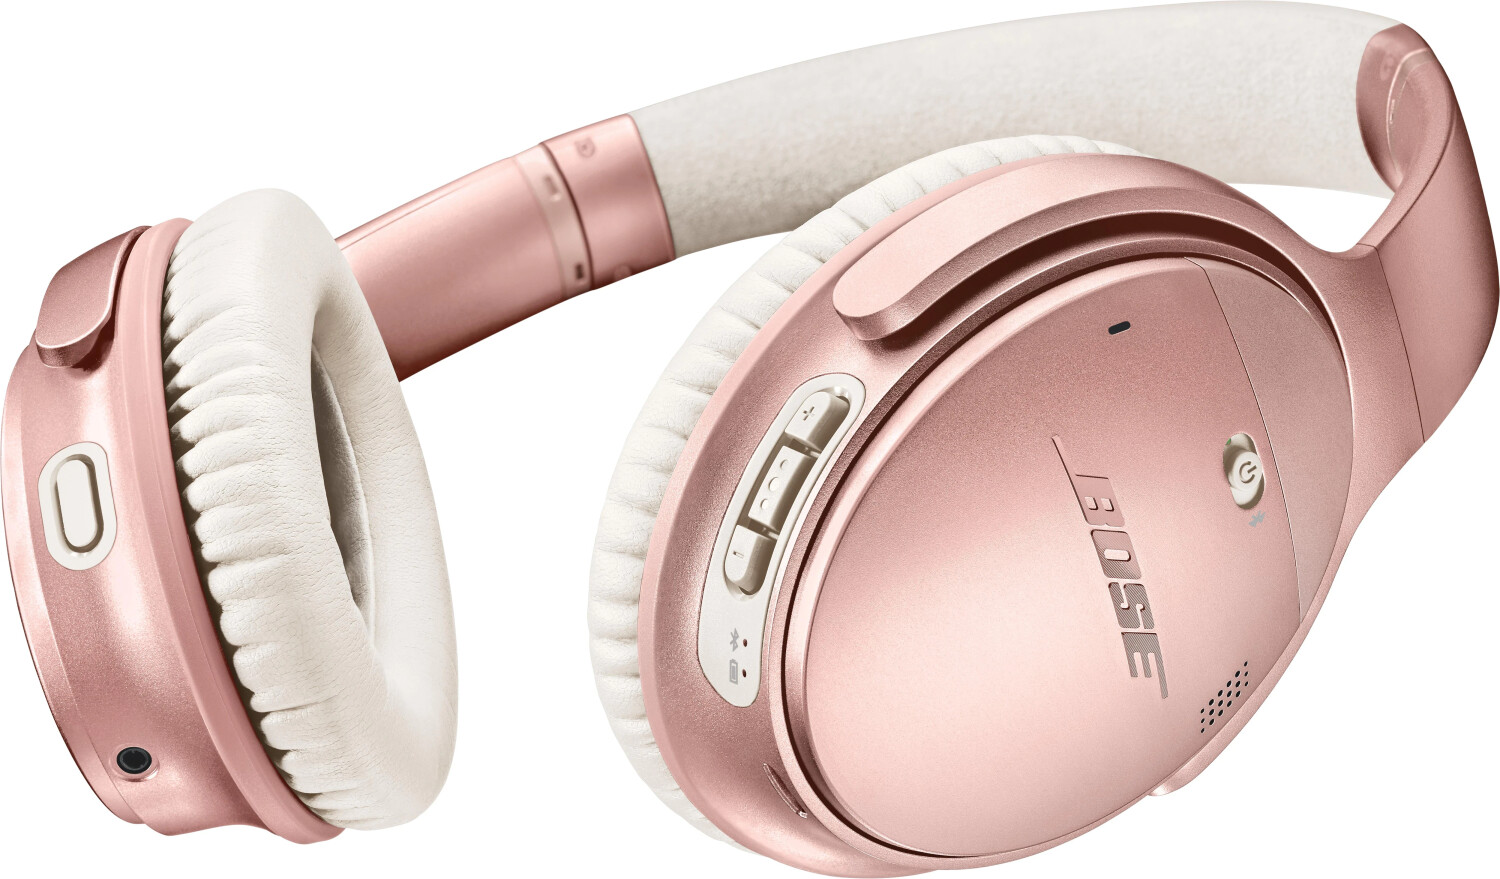 Bose QuietComfort 35 II Wireless (rose gold)